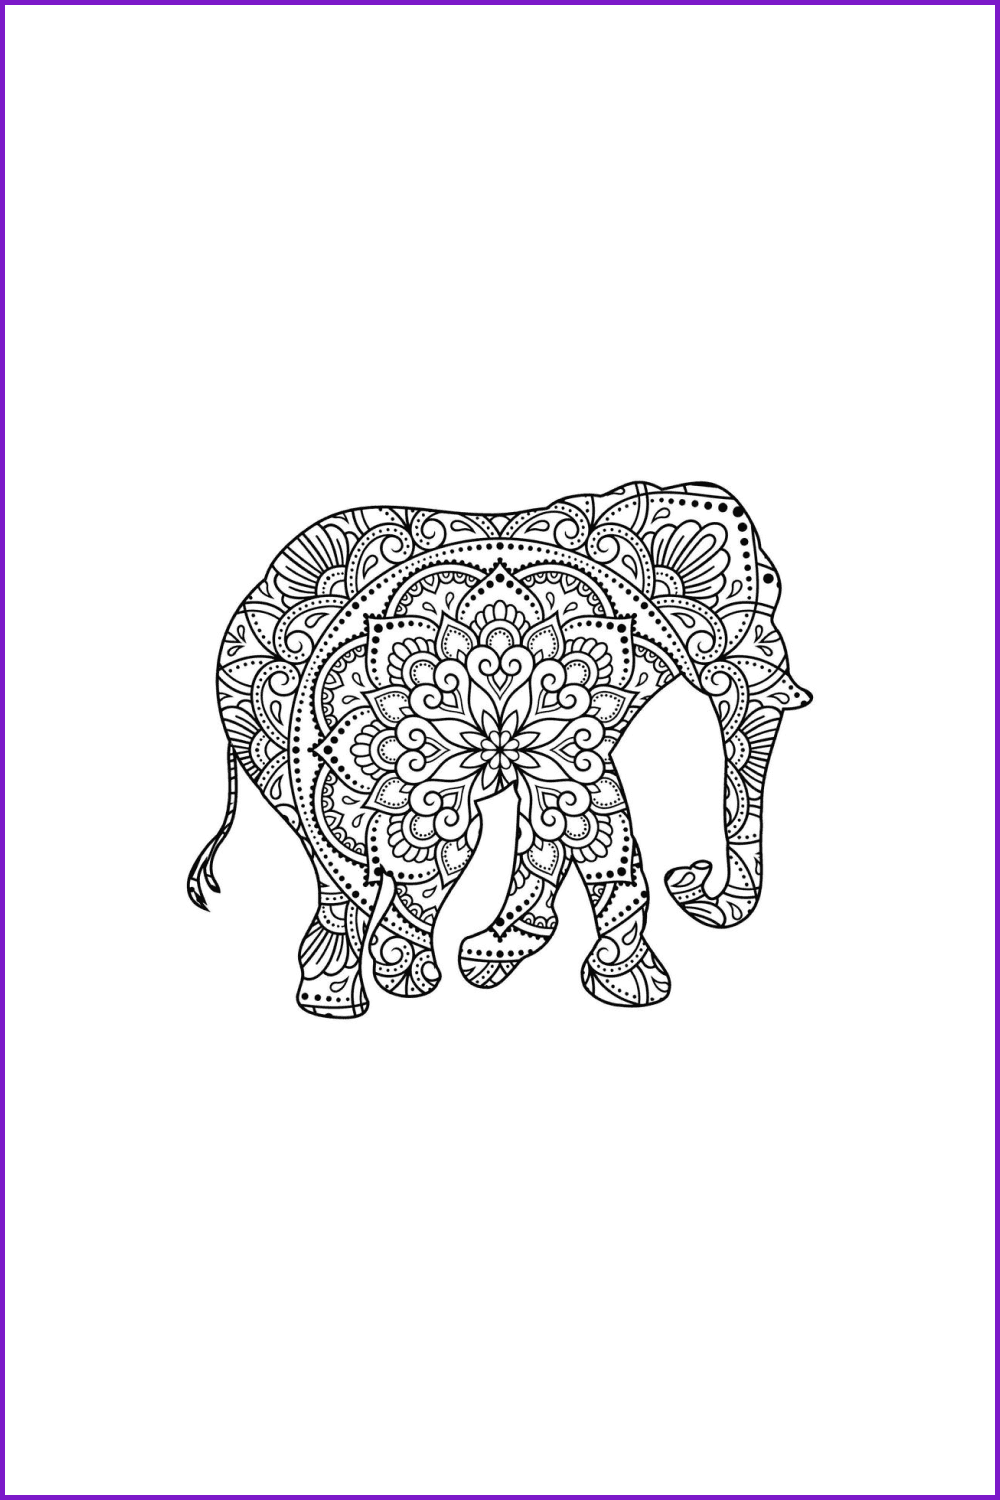 Elephant in mandala.